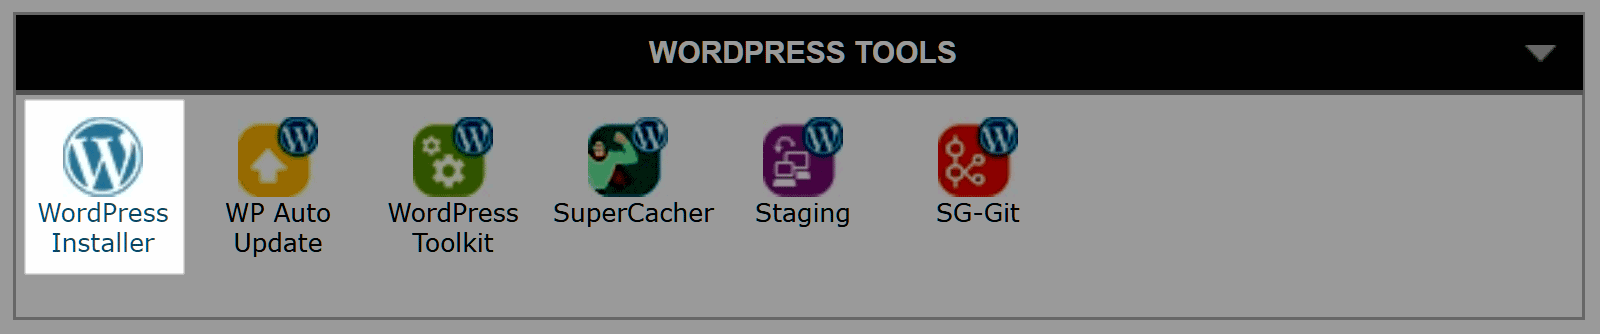 L'installer WordPRess ci cPanel